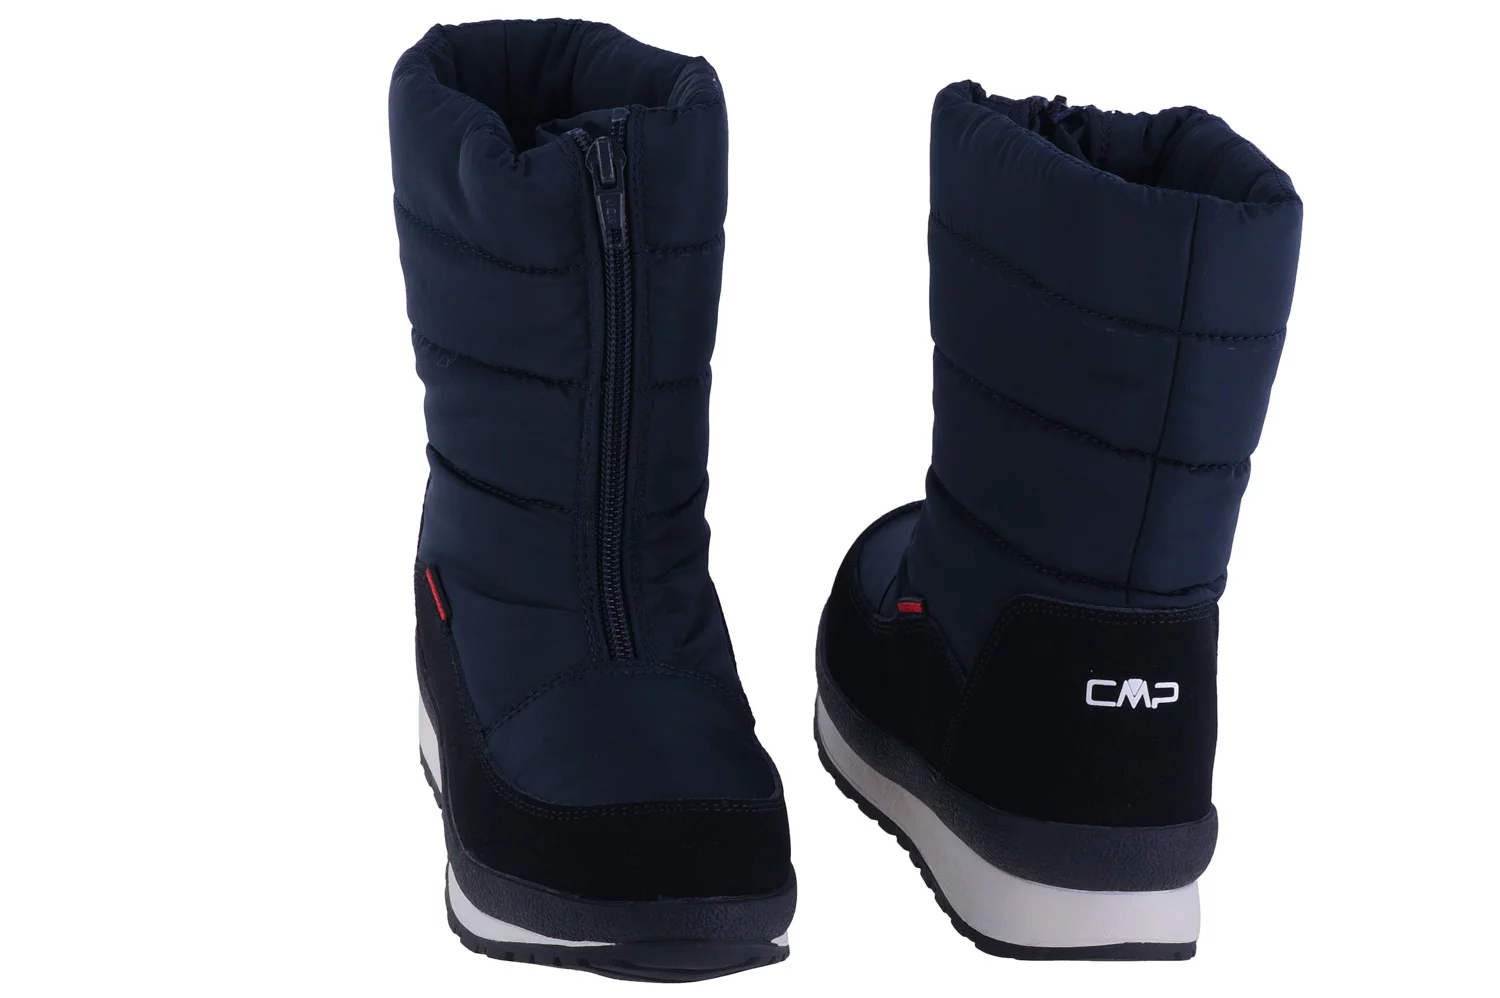 Butyjana.co.uk - 39Q4964-N950 Rae Snow CMP Boots shop